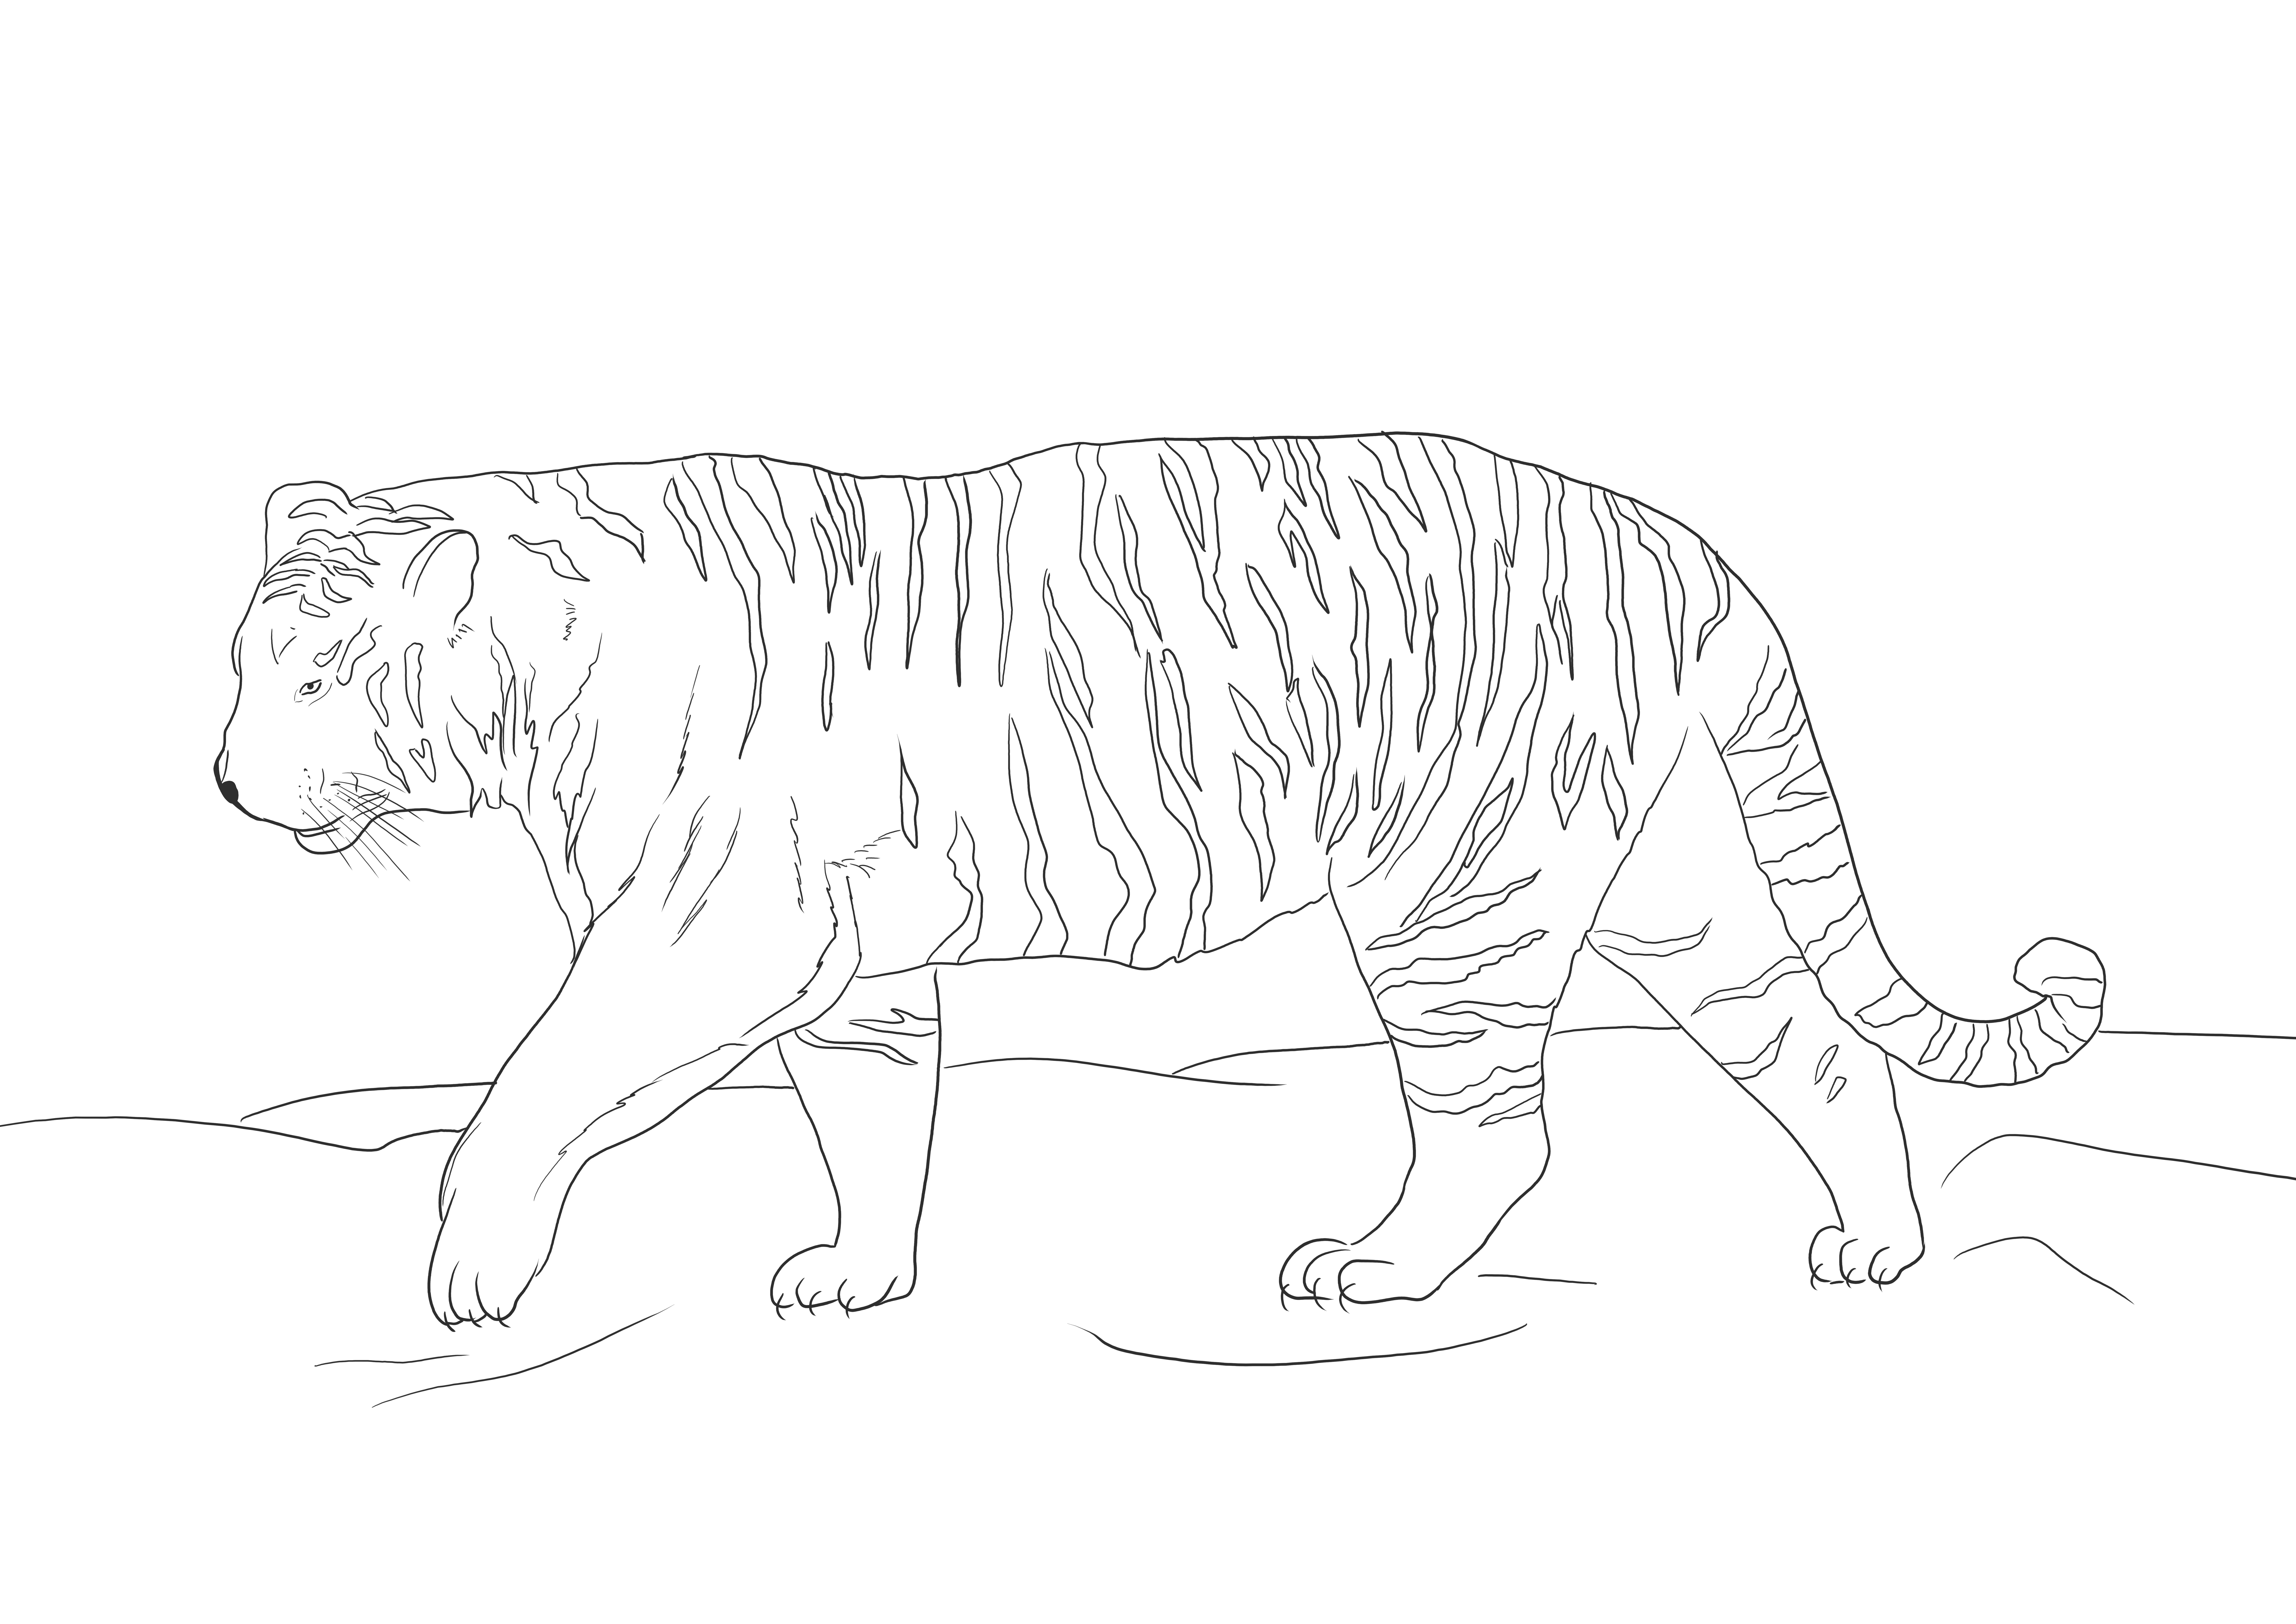 Siberian Tiger-a free educational coloring sheet